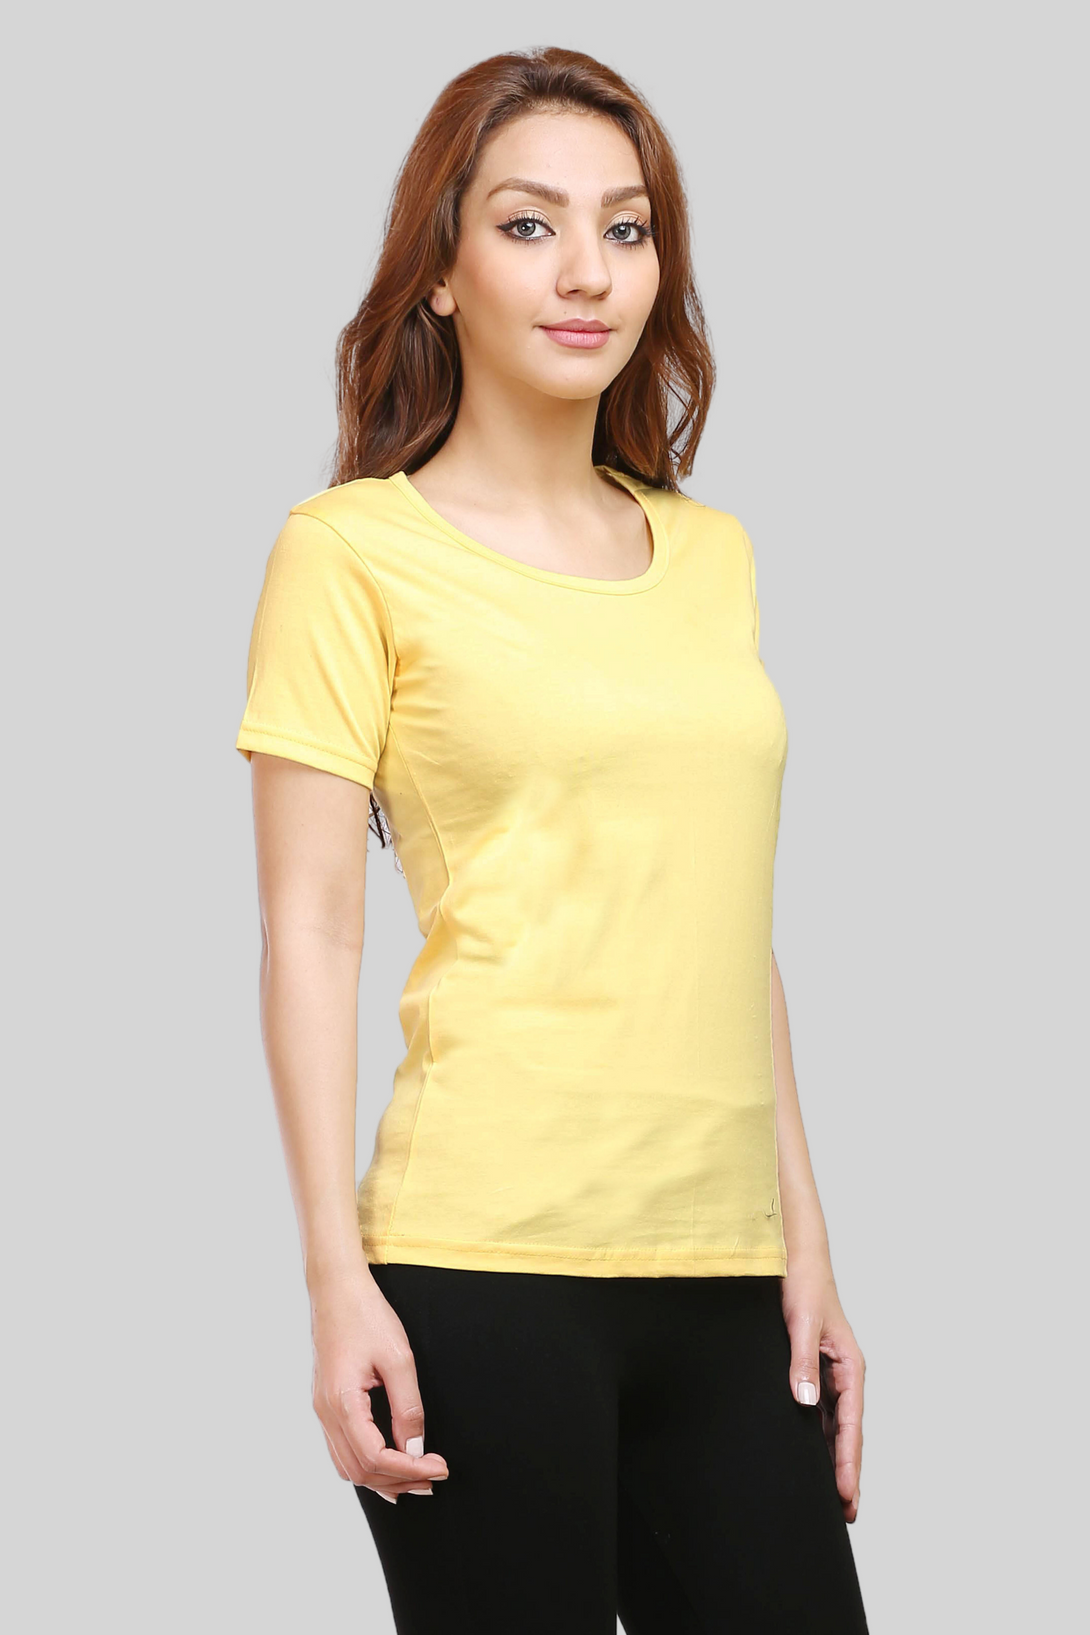 Yellow Scoop Neck T-Shirt For Women - WowWaves - 4